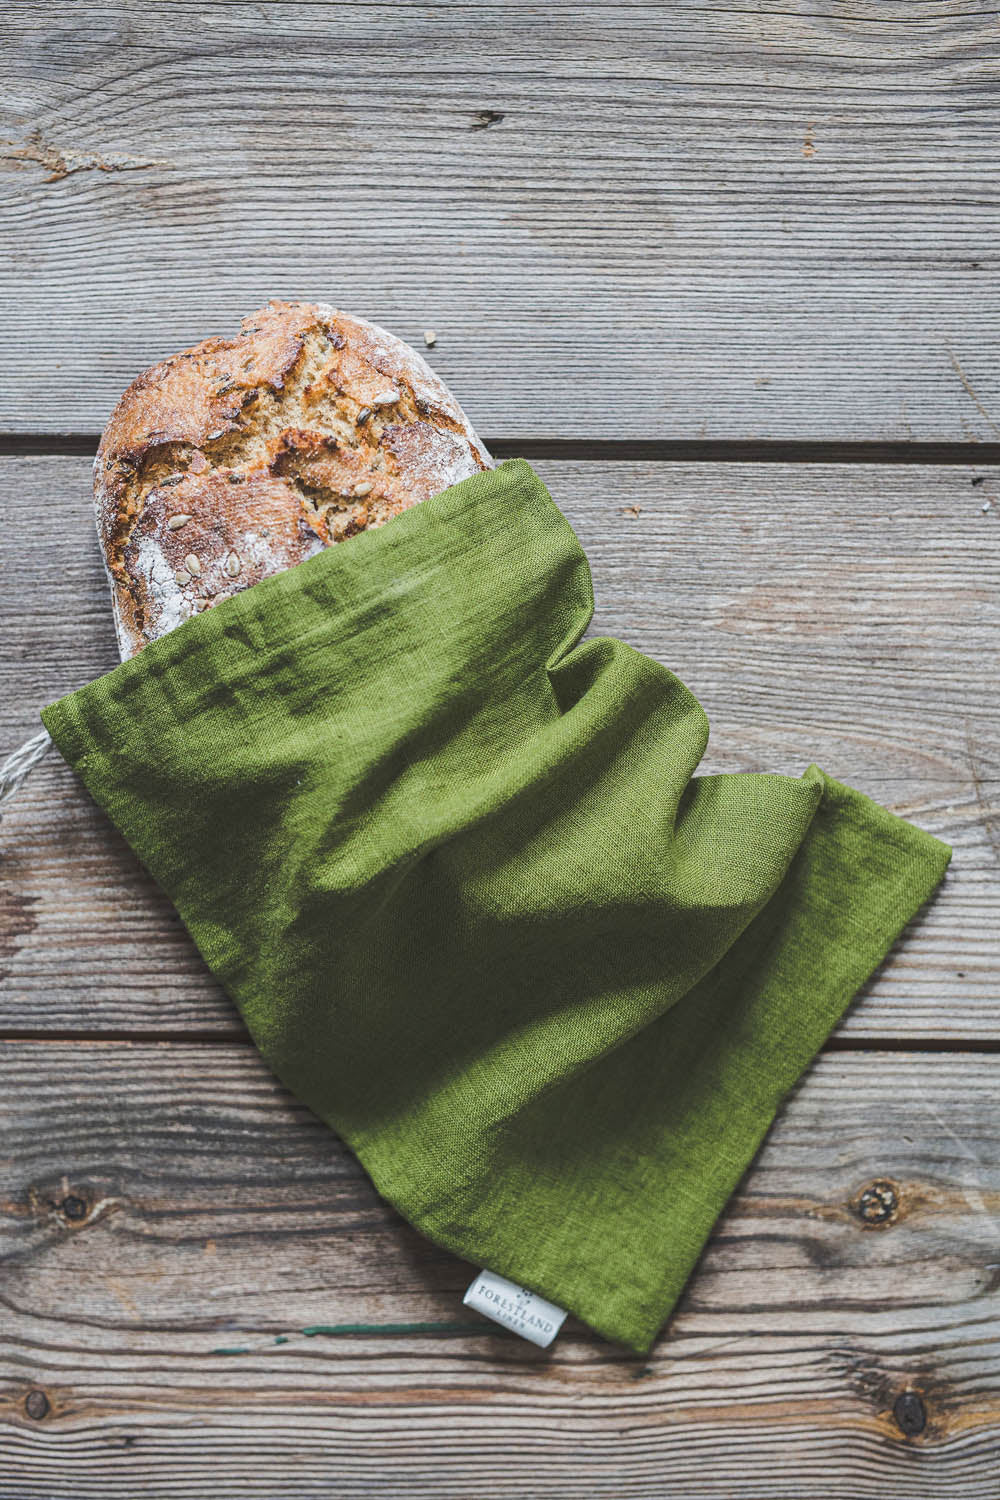 Natural linen bread bag in various colors